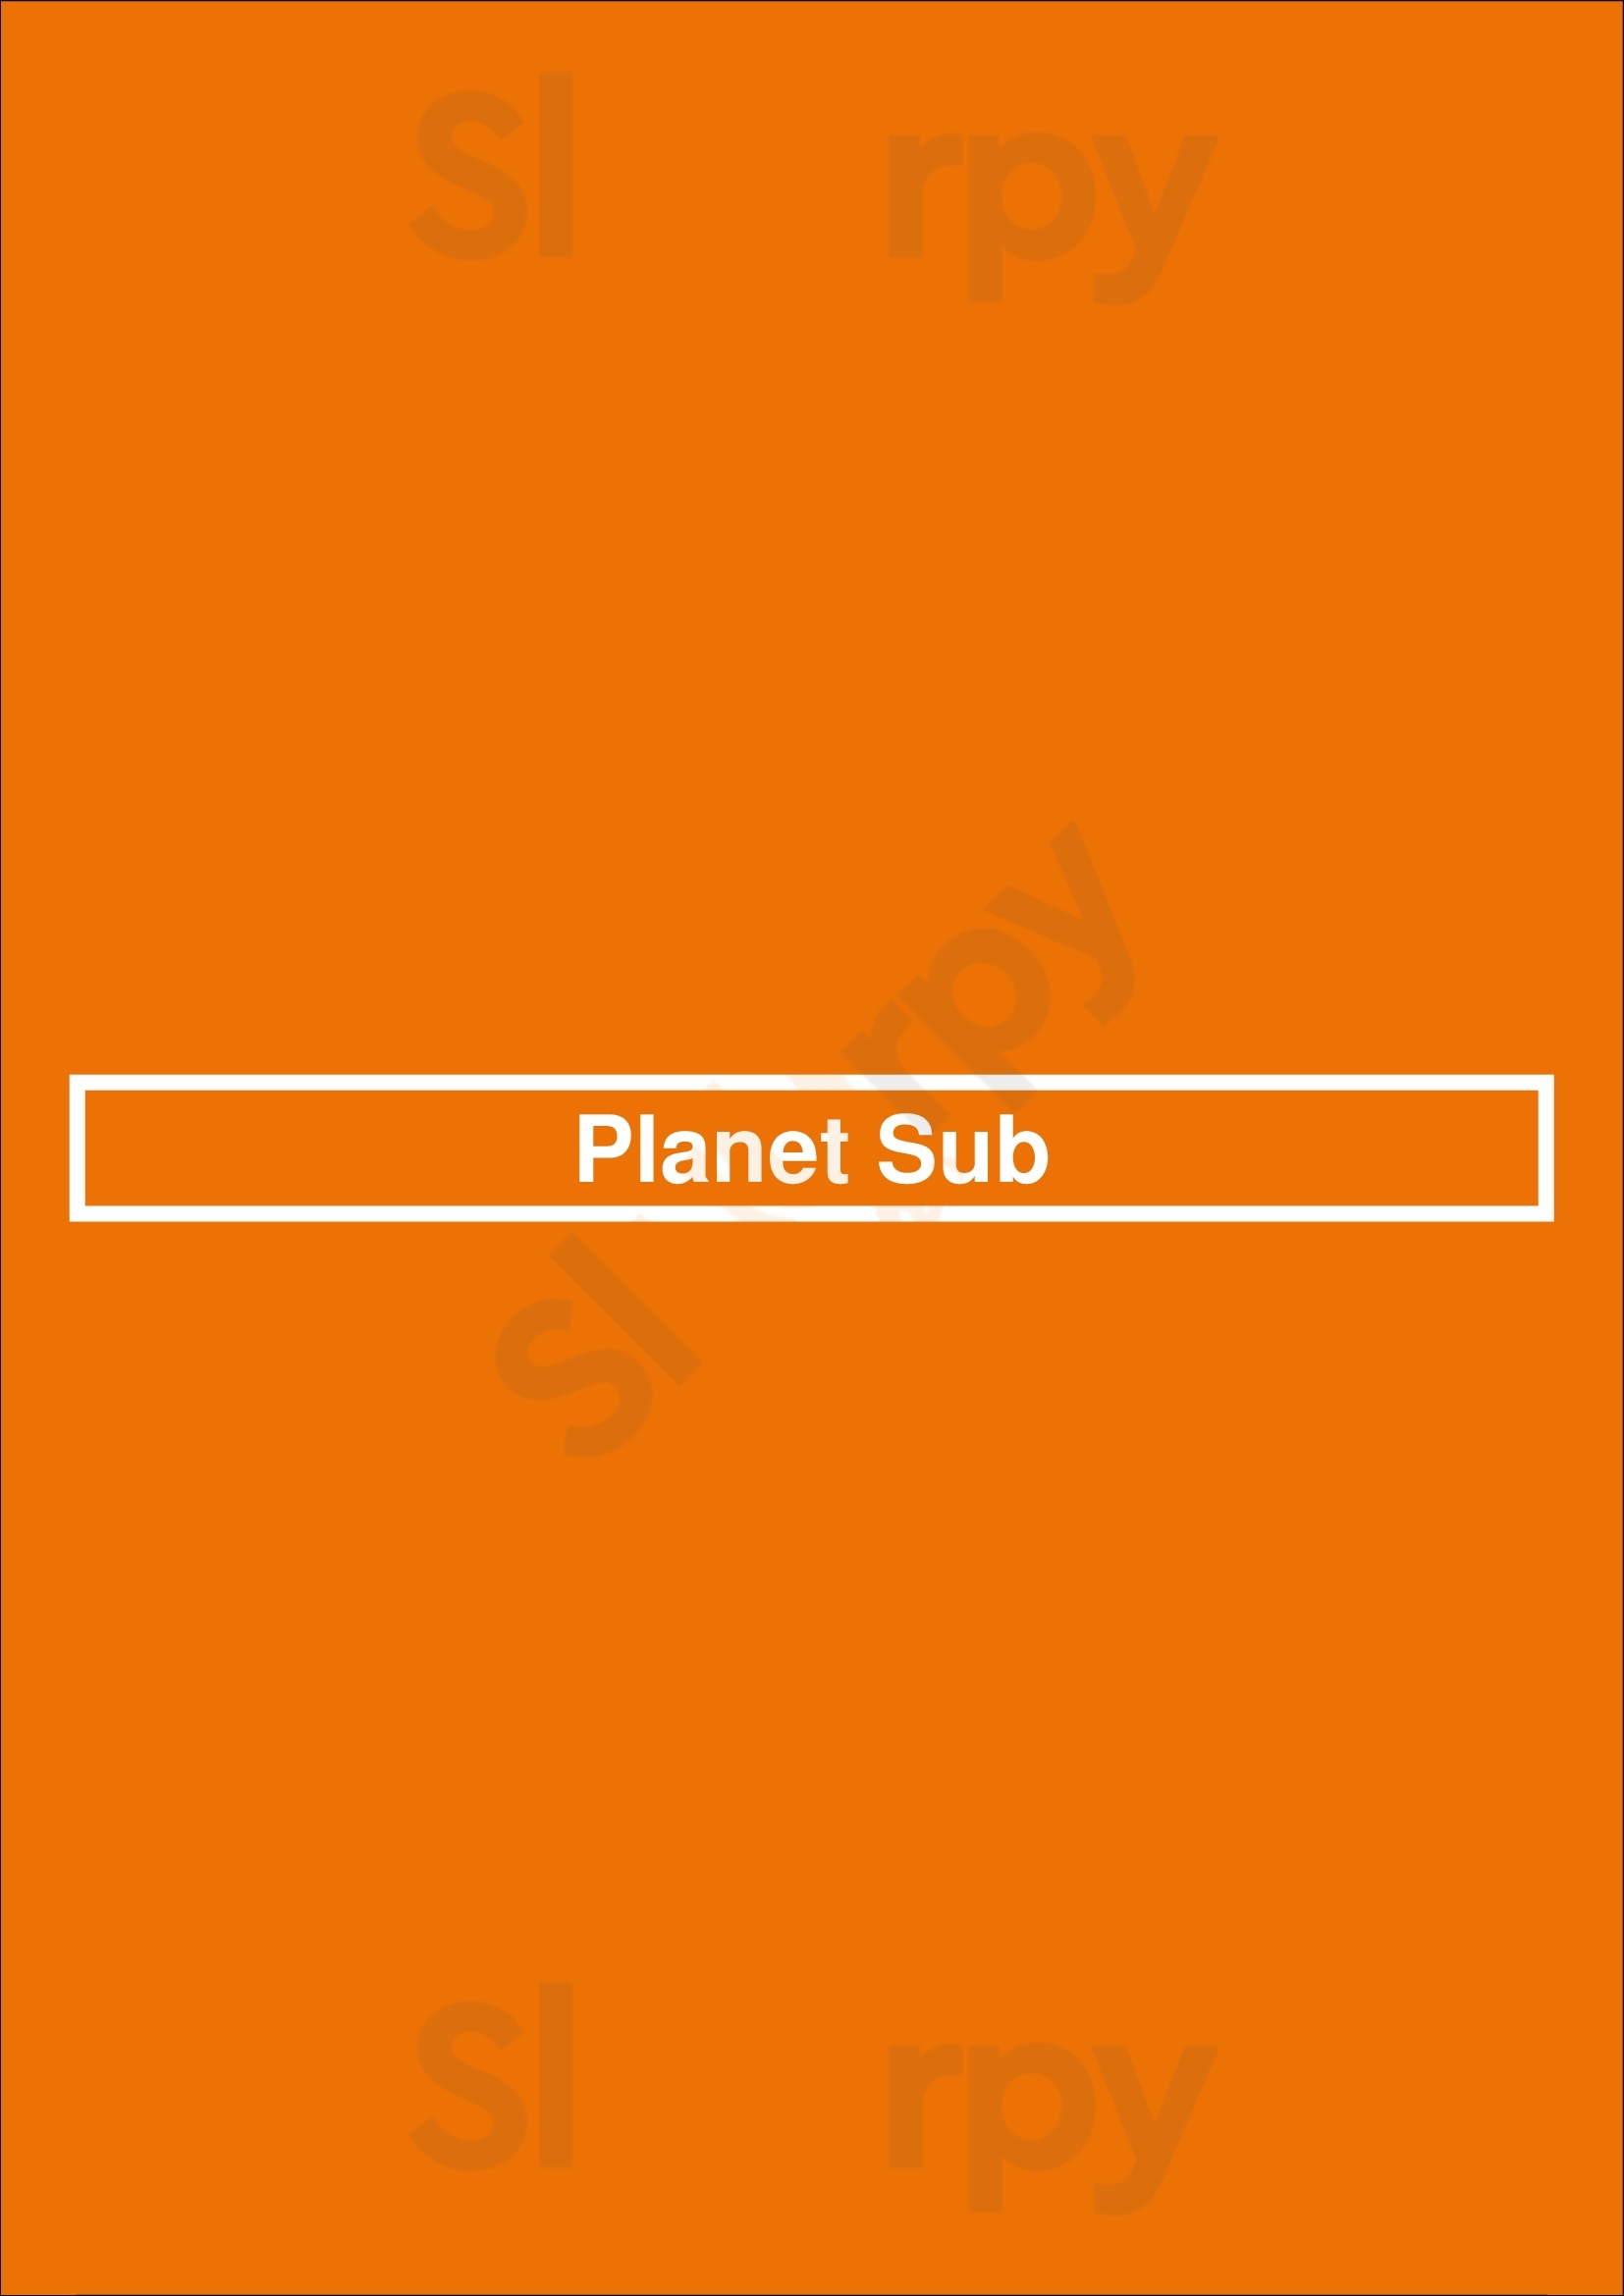 Planet Sub Kansas City Menu - 1